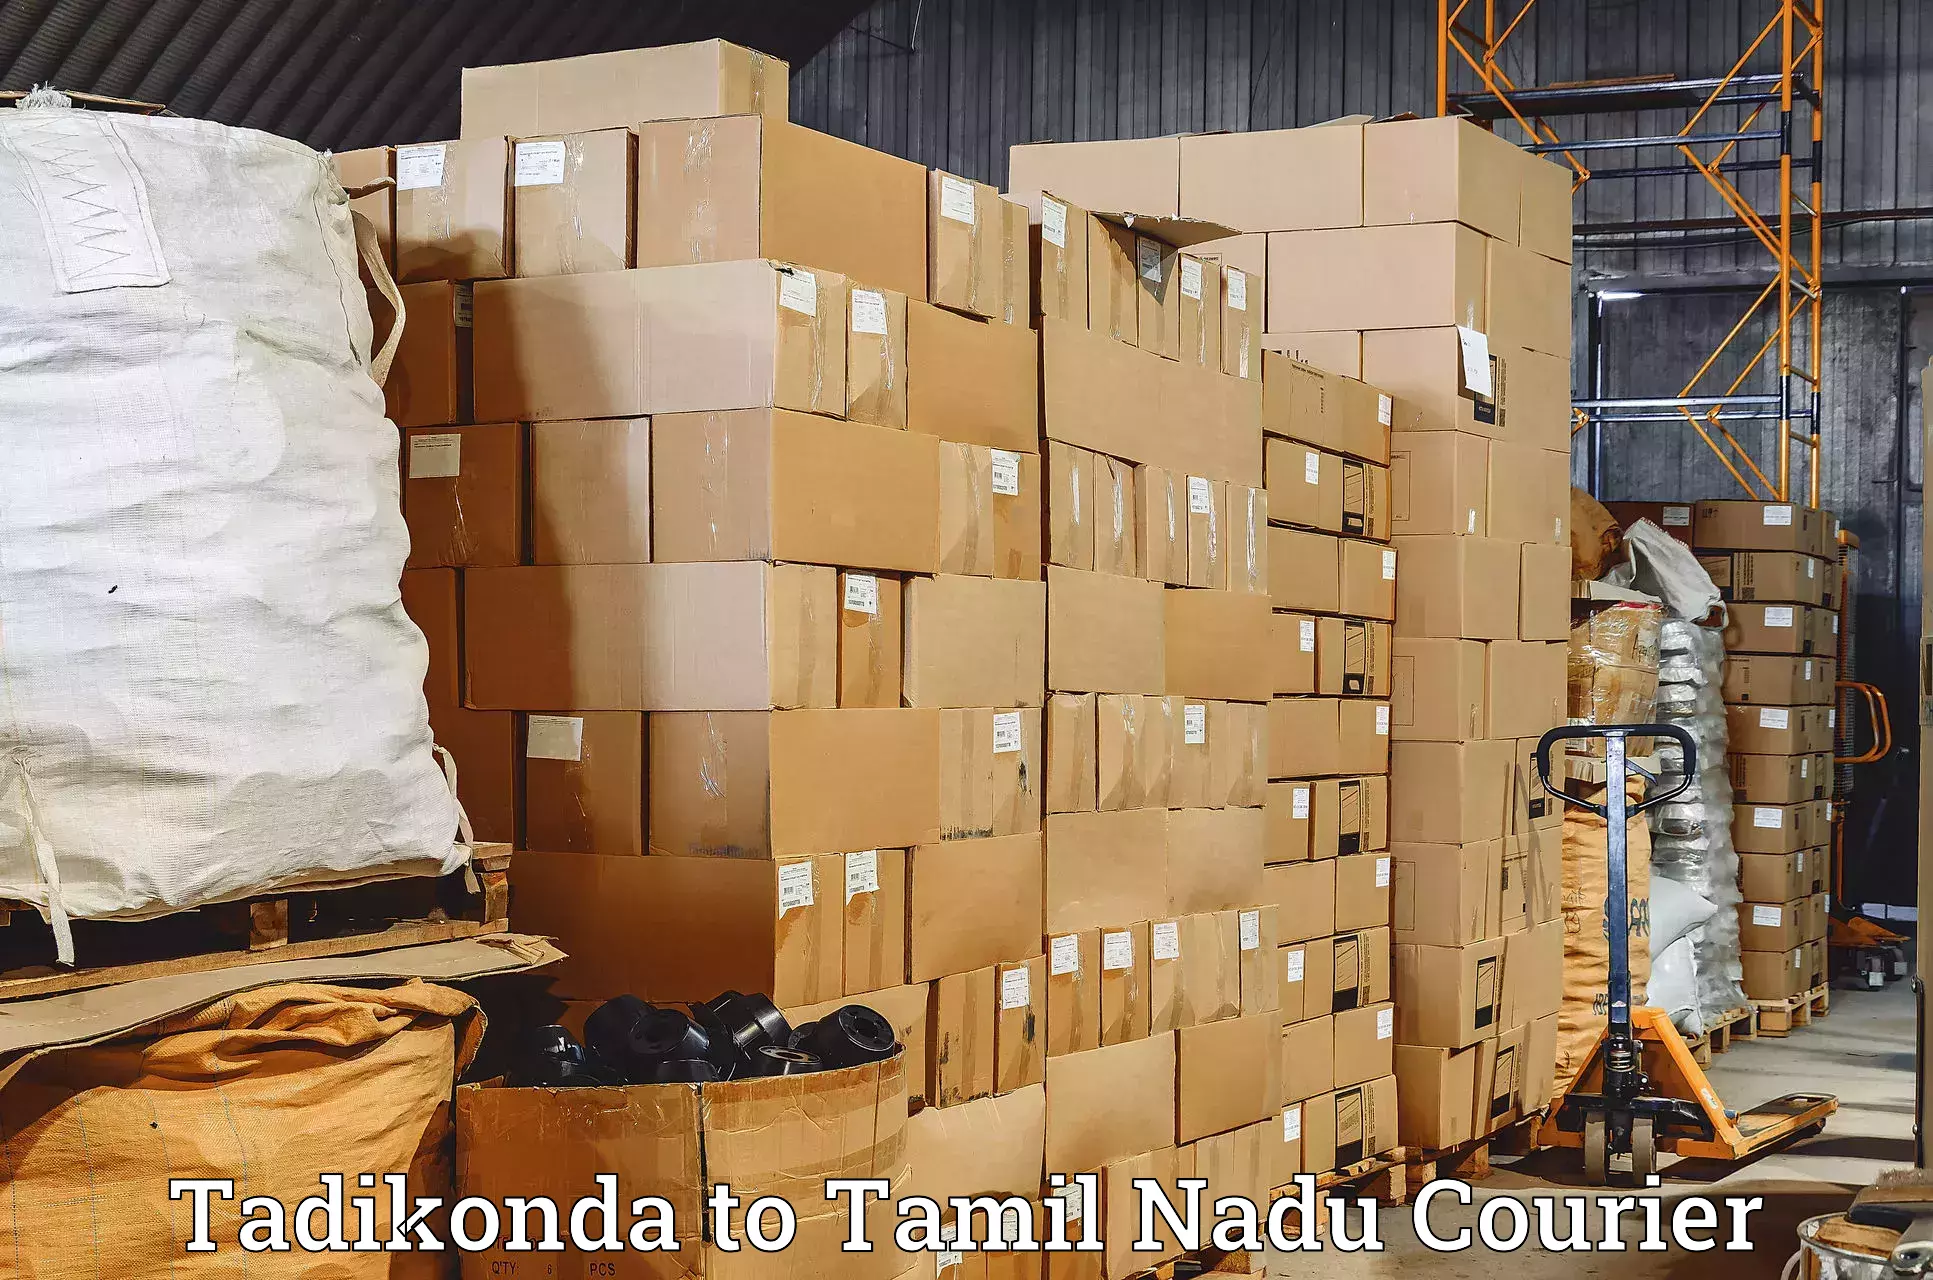 Speedy delivery service Tadikonda to Tiruturaipundi